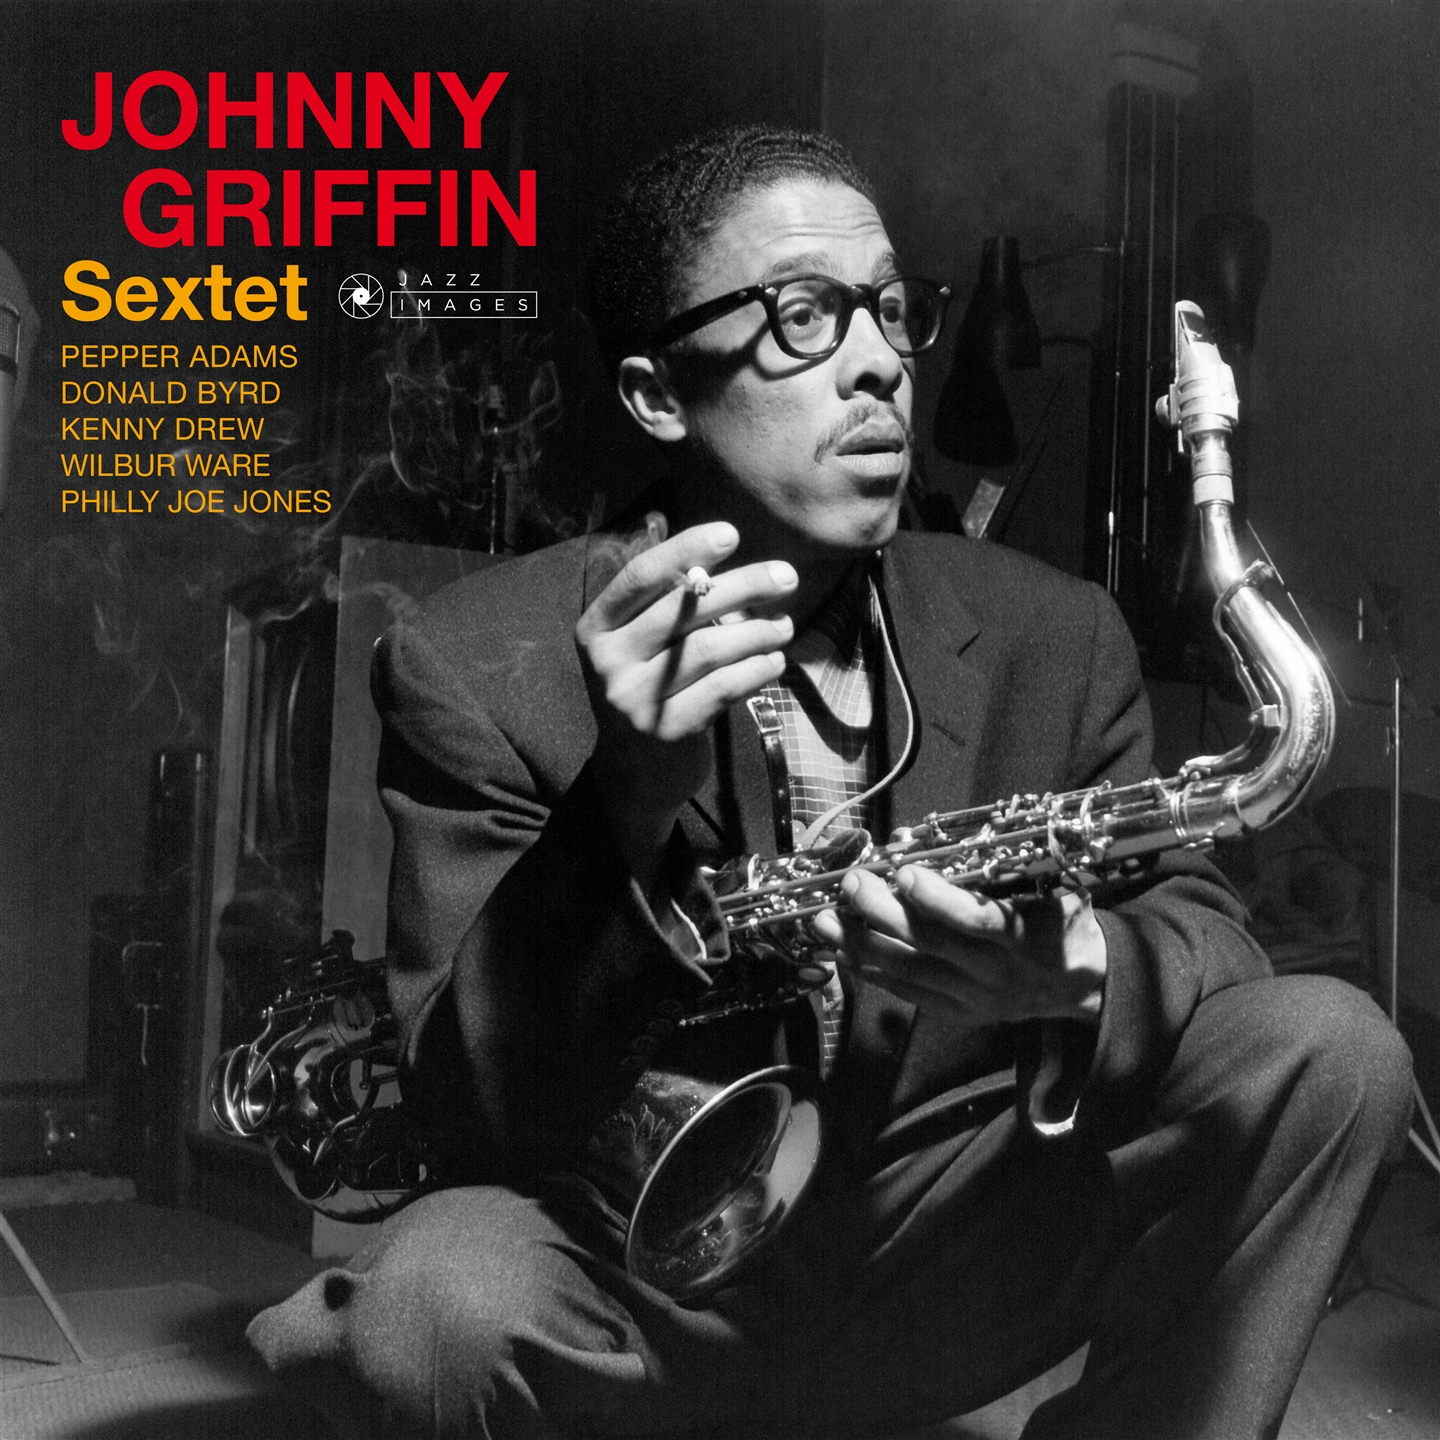 JOHNNY GRIFFIN SEXTET [GATEFOLD LP]